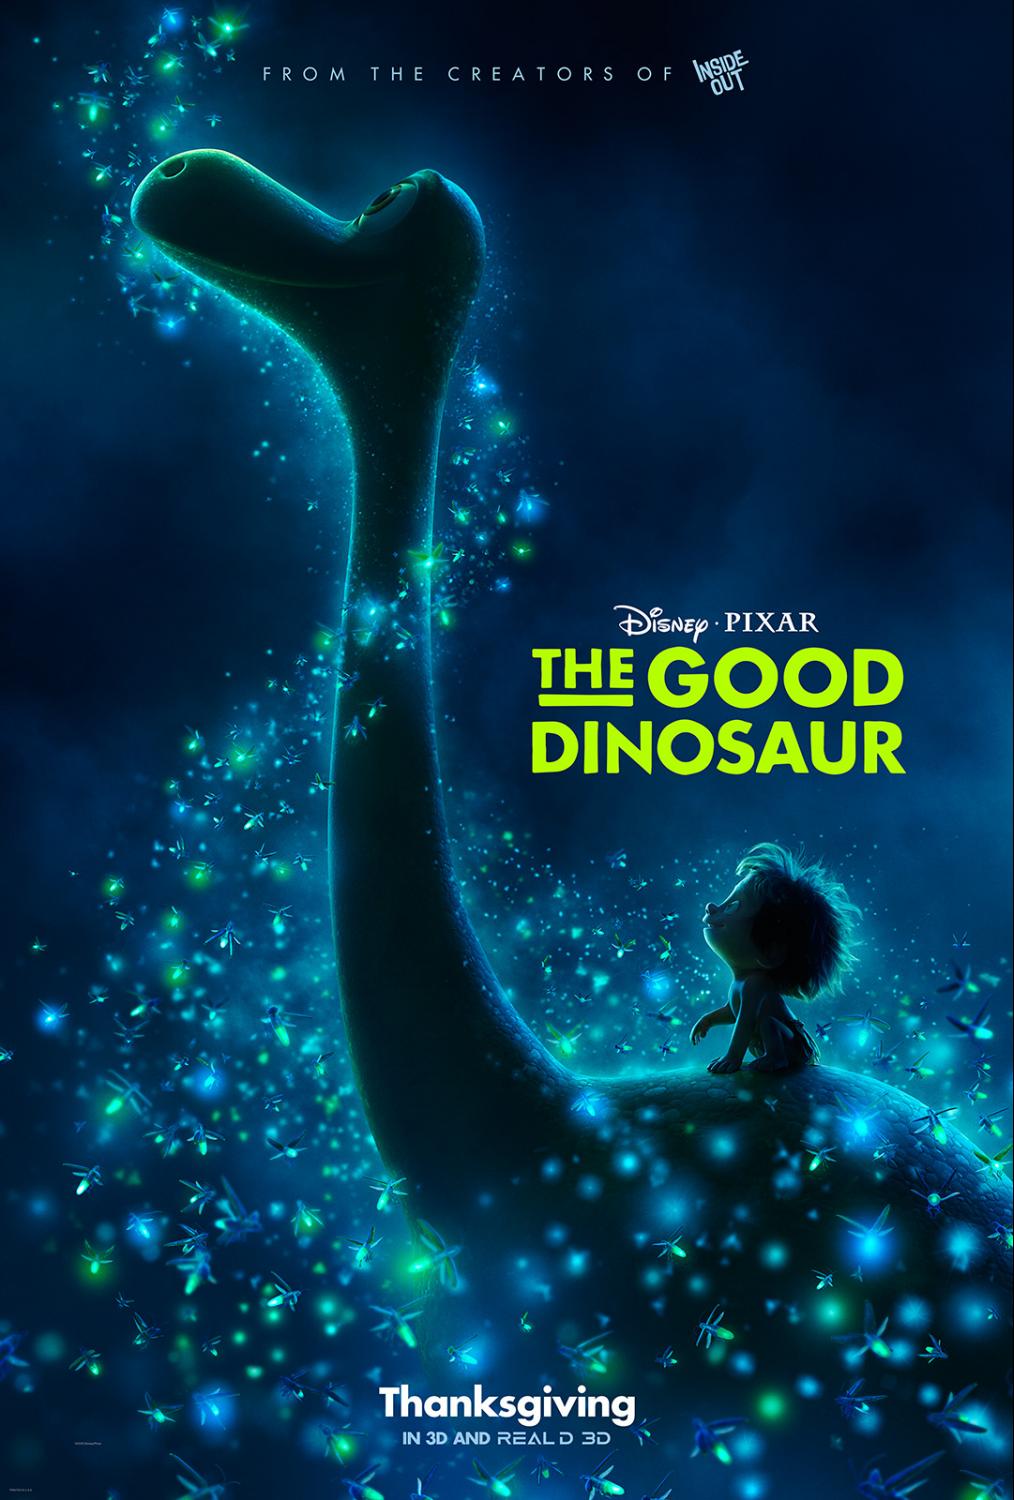 New Trailer of Disney & Pixar’s ‘The Good Dinosaur’ Now Available